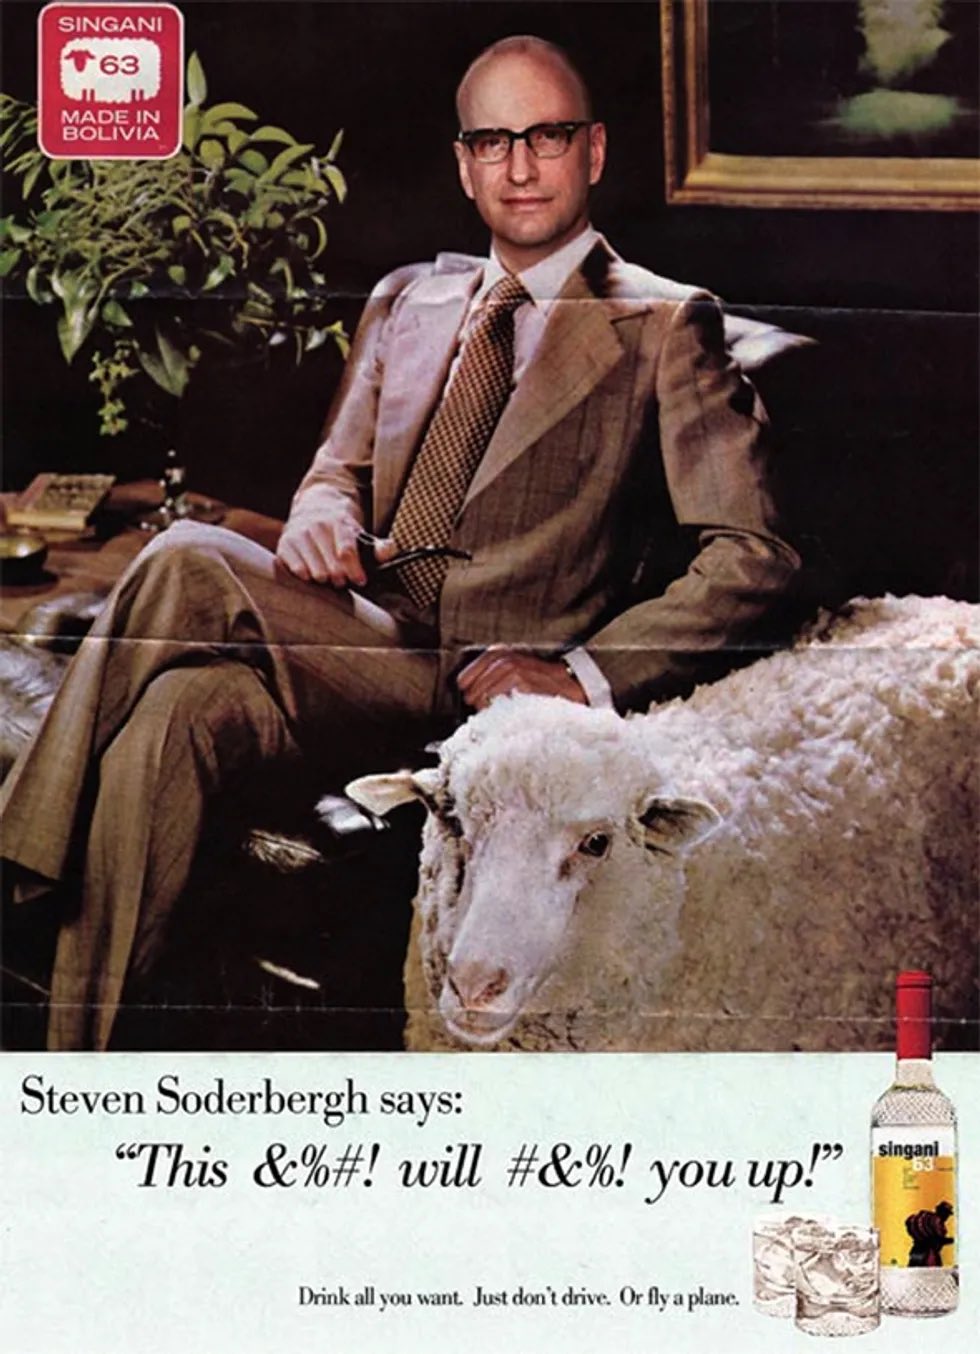 Happy birthday, Steven Soderbergh! 